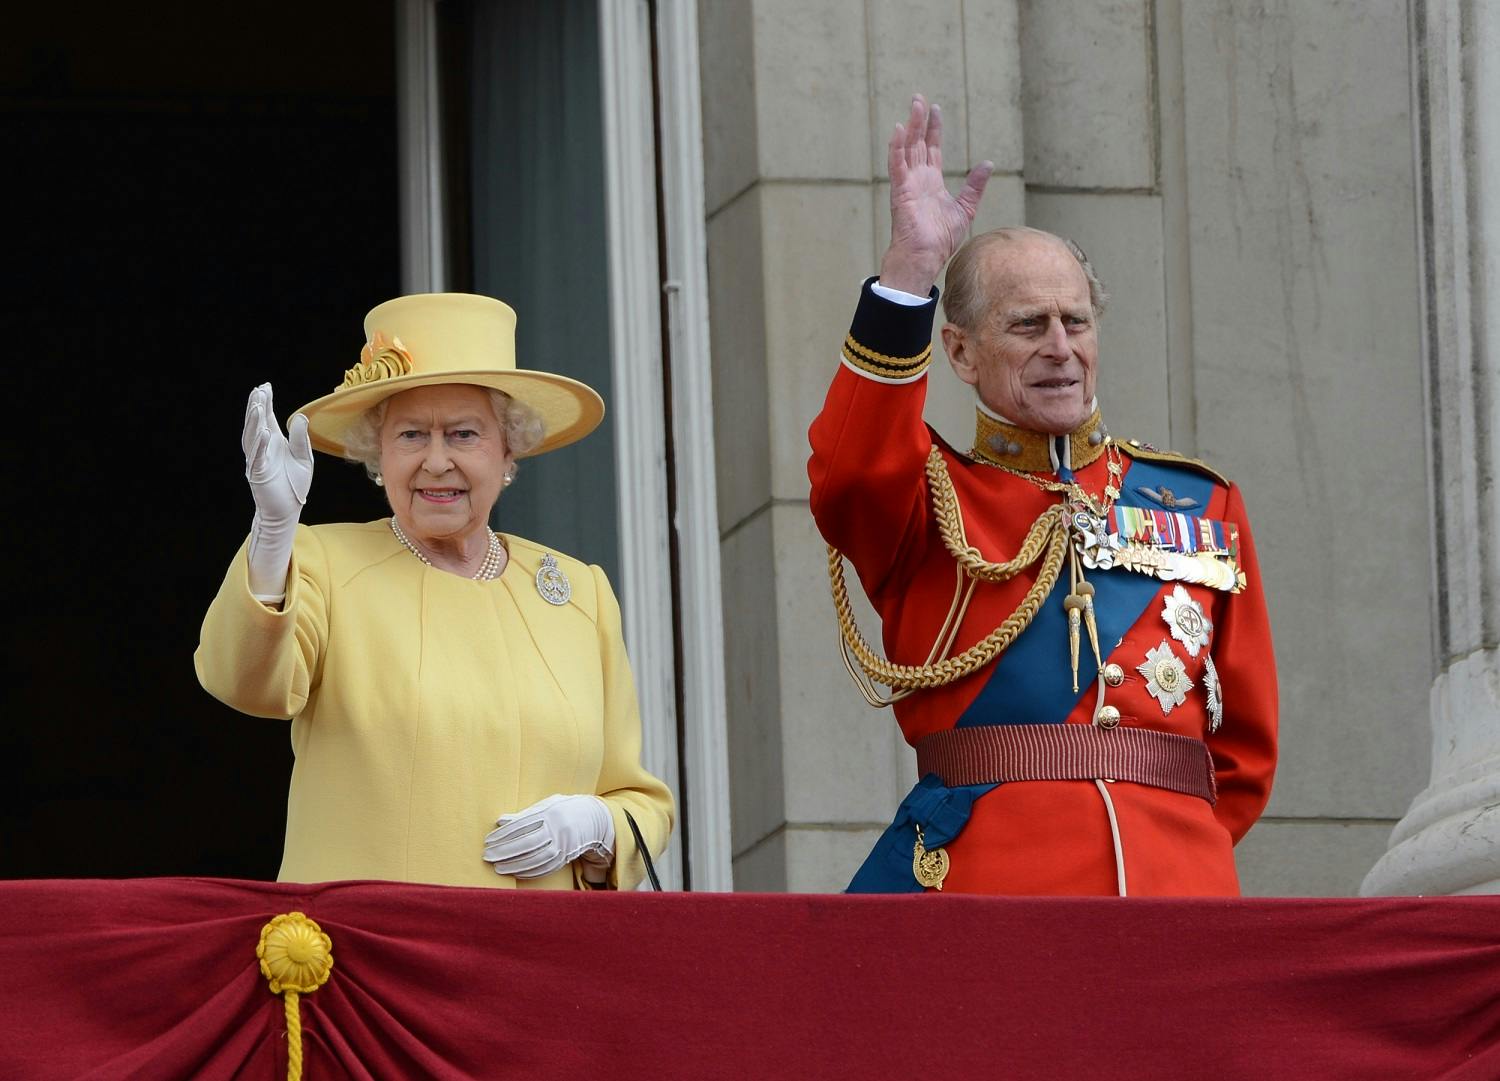 The Queen and the Duke of Edinburgh waving on the Buckingham Palace balcony